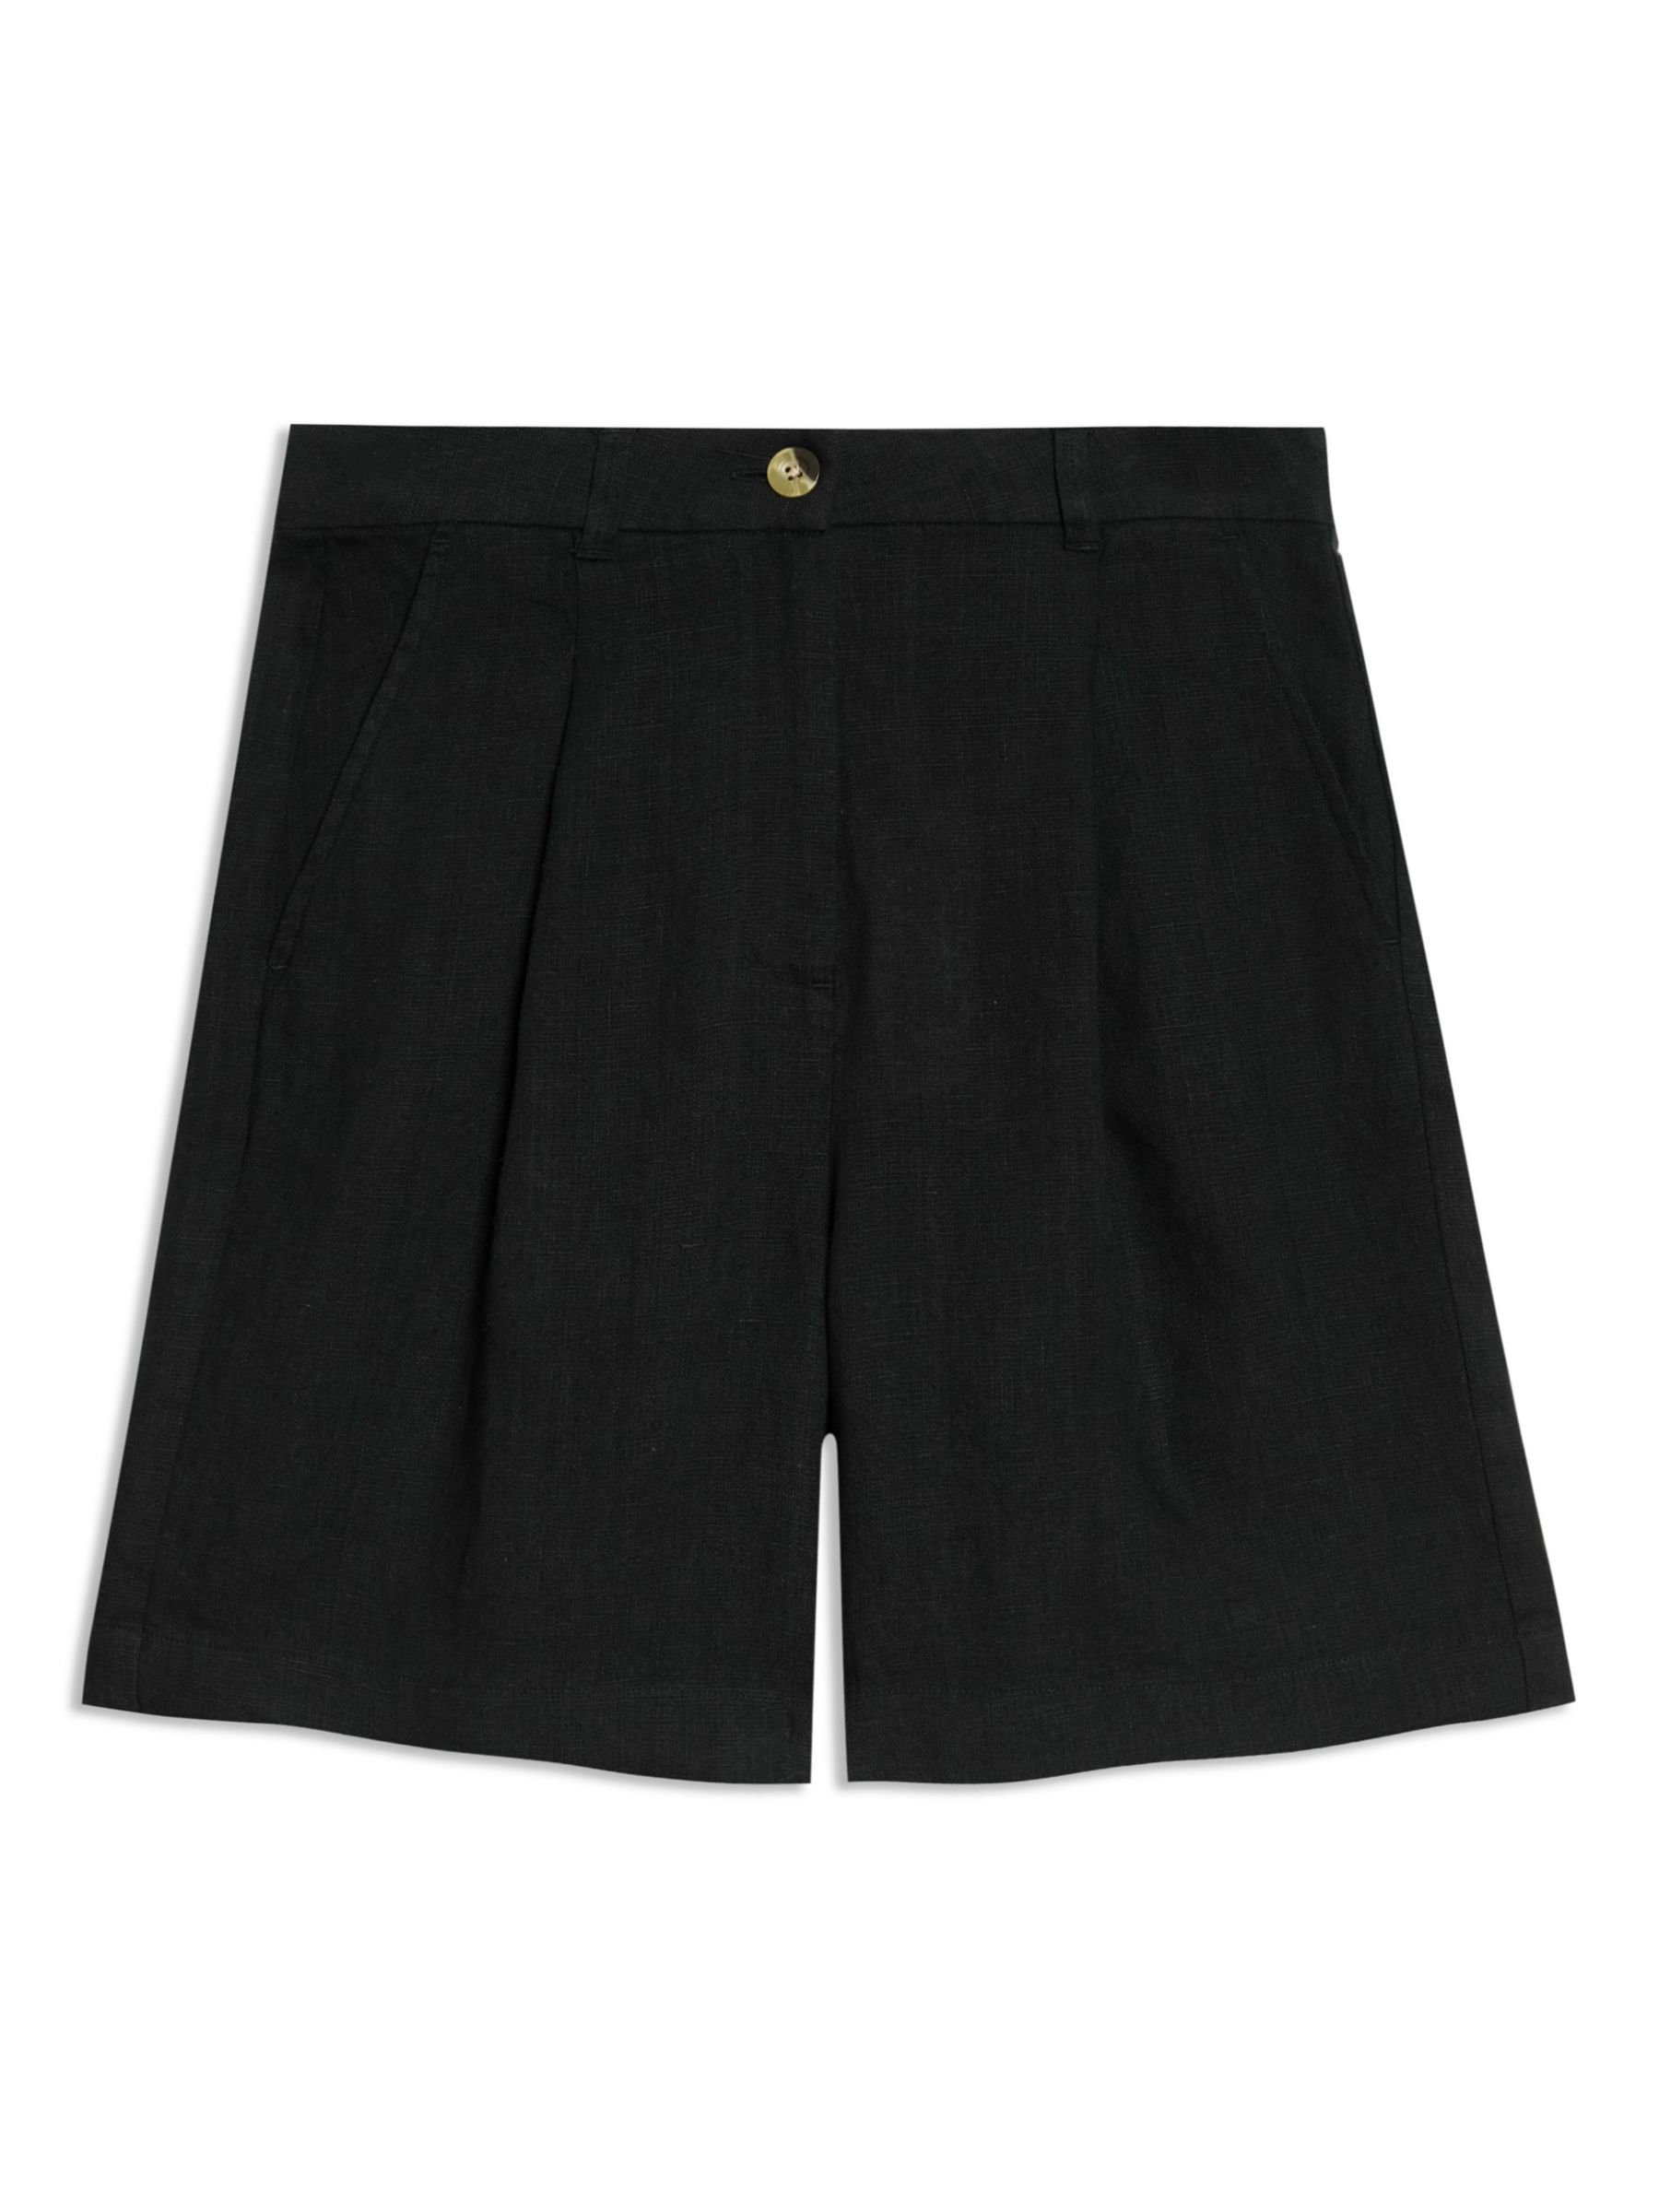 Albaray Tailored Linen Shorts, Black, 8